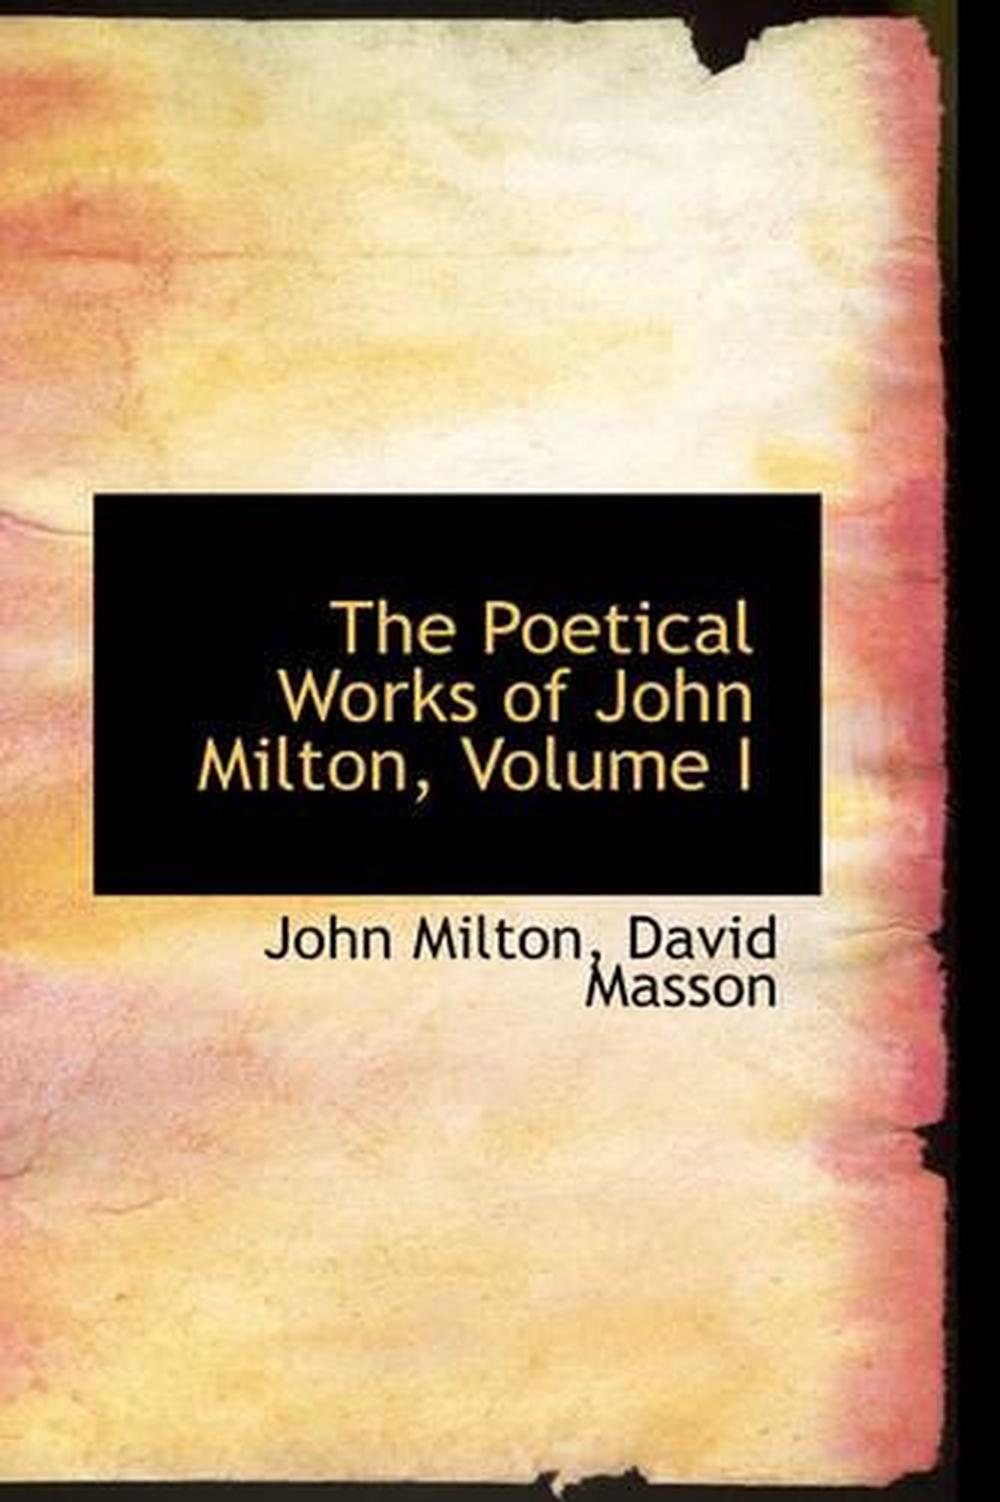 The Major Works by John Milton